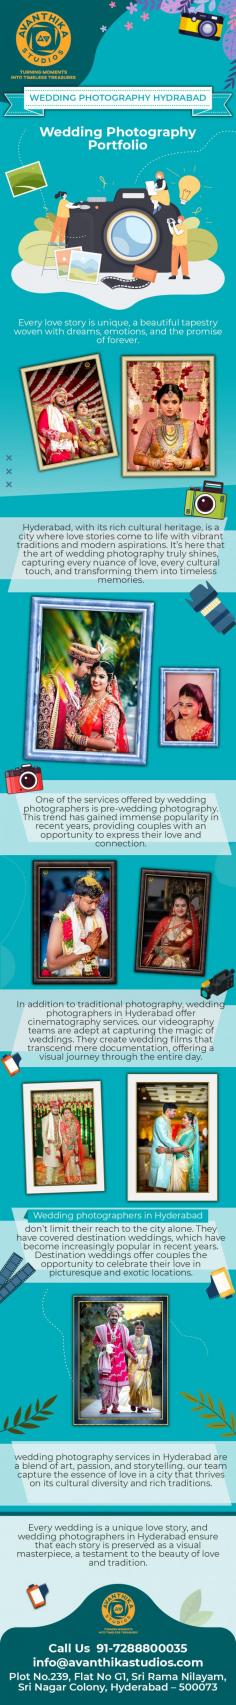 Looking for Professional Wedding Photographers in Hyderabad? Avanthika Studios delivers breathtaking wedding memories. Book us now!